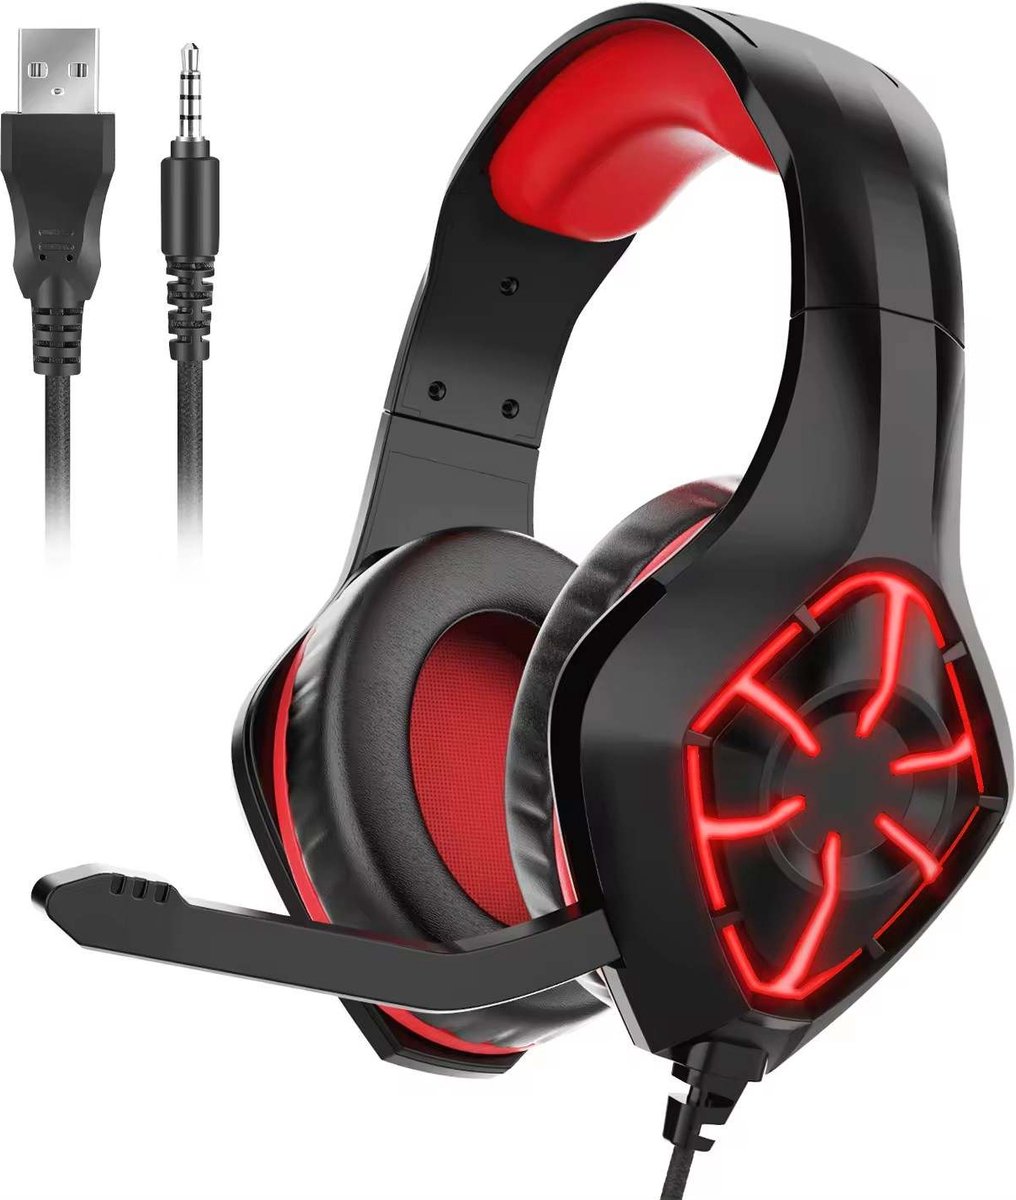 RyC Toys Gaming Headset met Microfoon -zwart/rood - 2 meter kabel | Over-Ear Hoofdtelefoon| Ruisonderdrukking, Surround Sound, LED-licht - PC, PS4, PS5